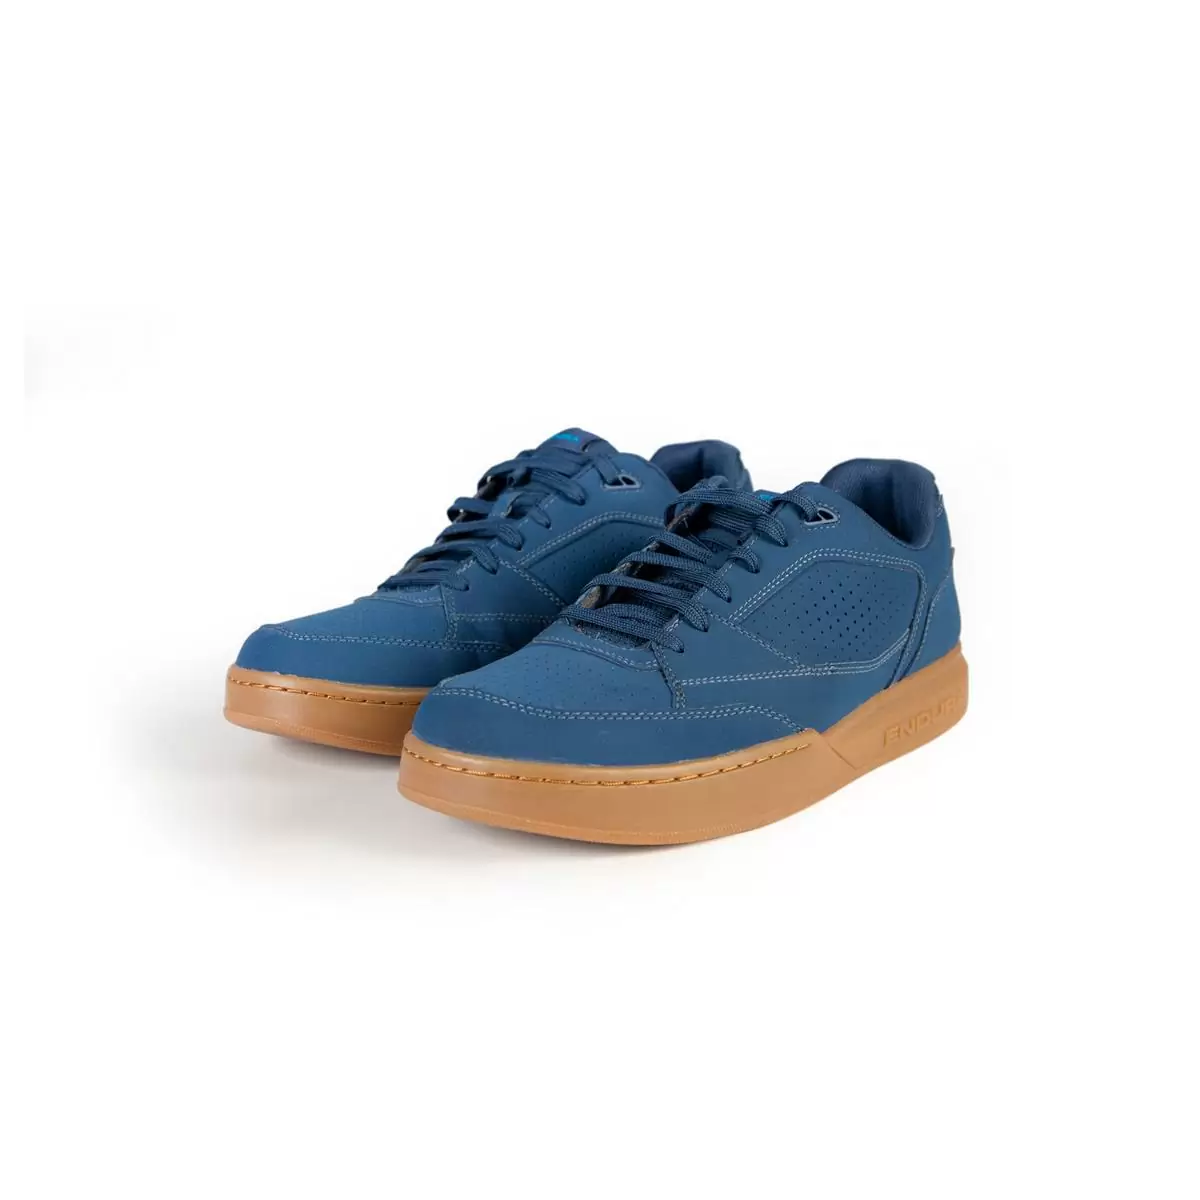 Hummvee Flat Pedal Shoes Blue Size 38 - image